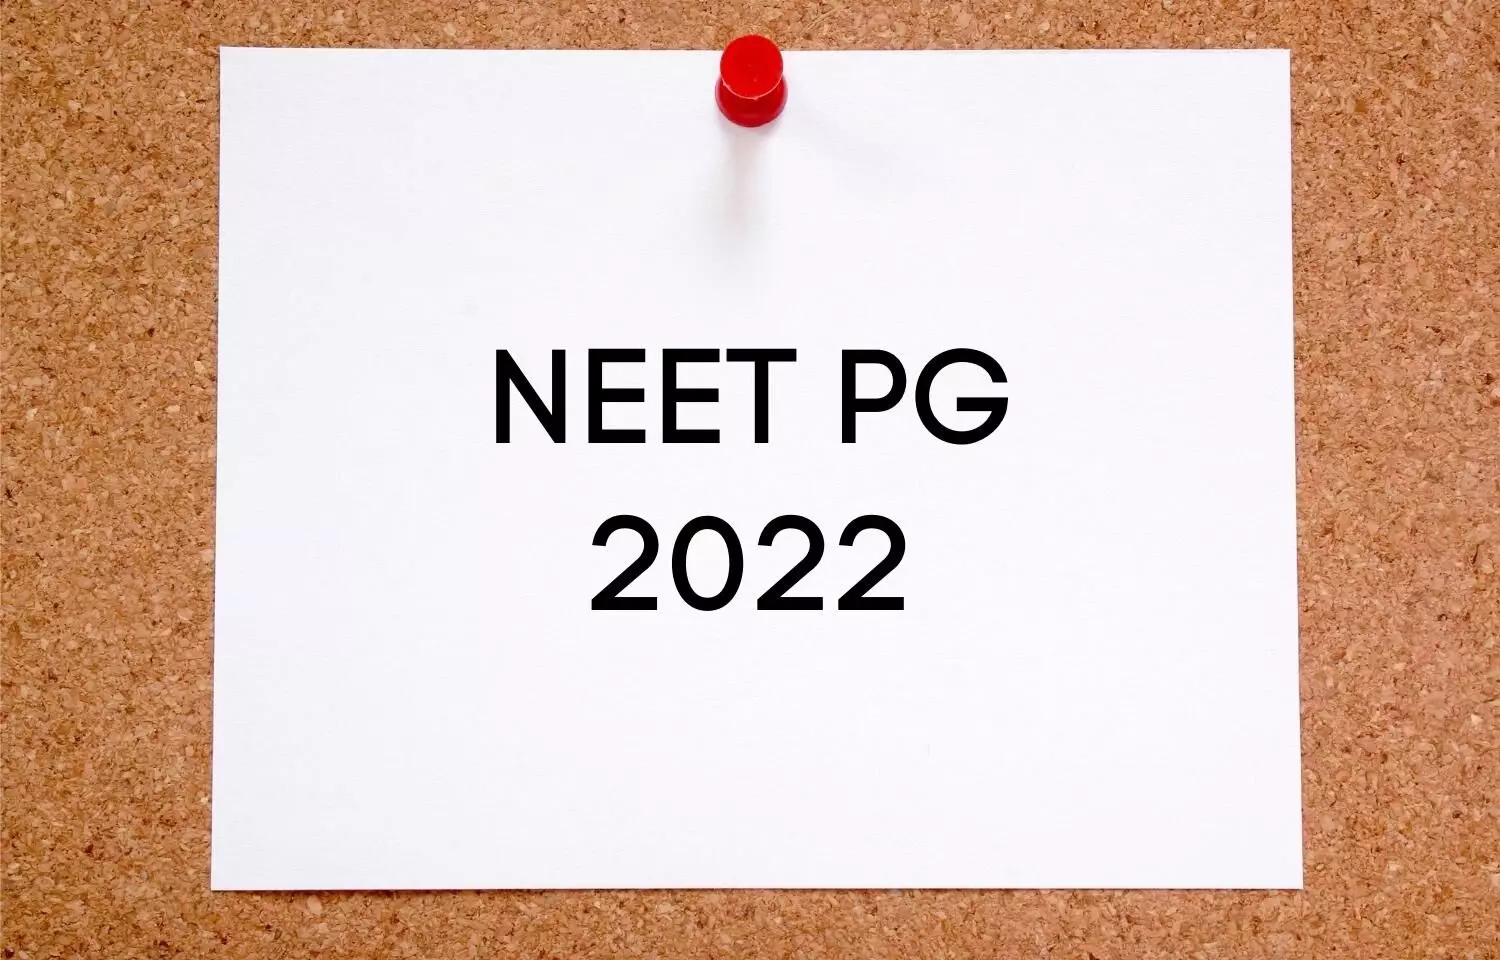 NEET PG 2022: ABVP says Health Minister ready to postpone exam, NMC opposing